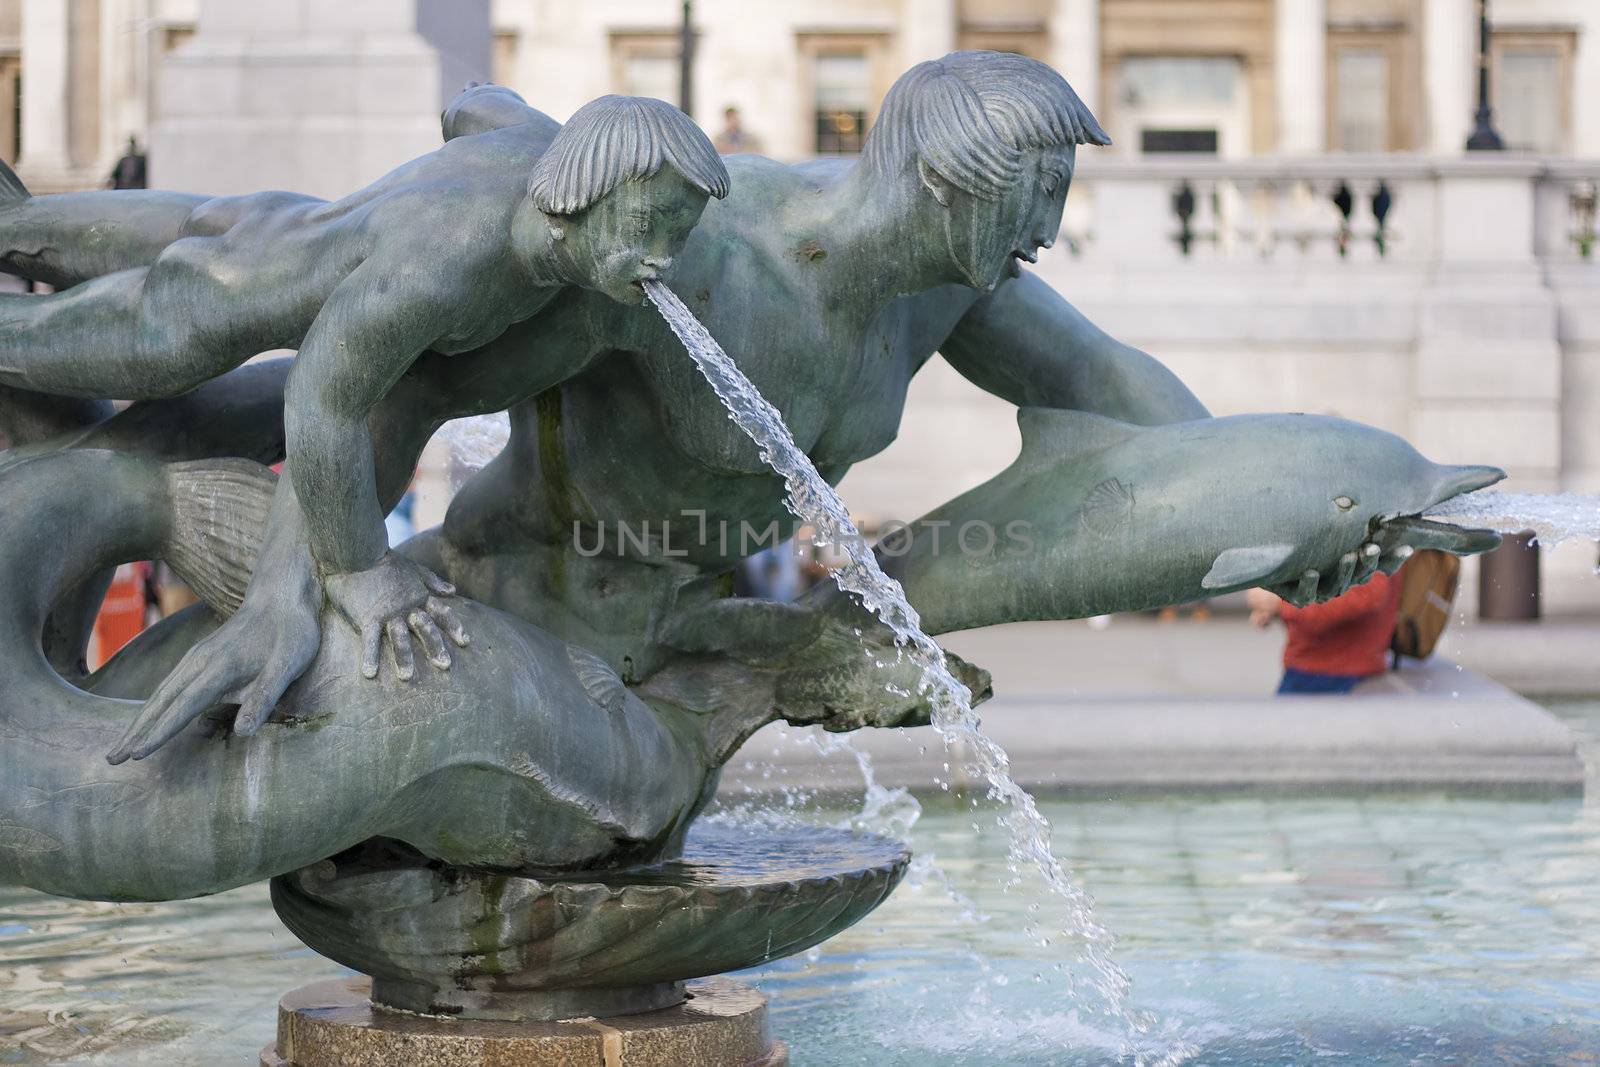 Fountain in Trafalgar Square in London by kmiragaya